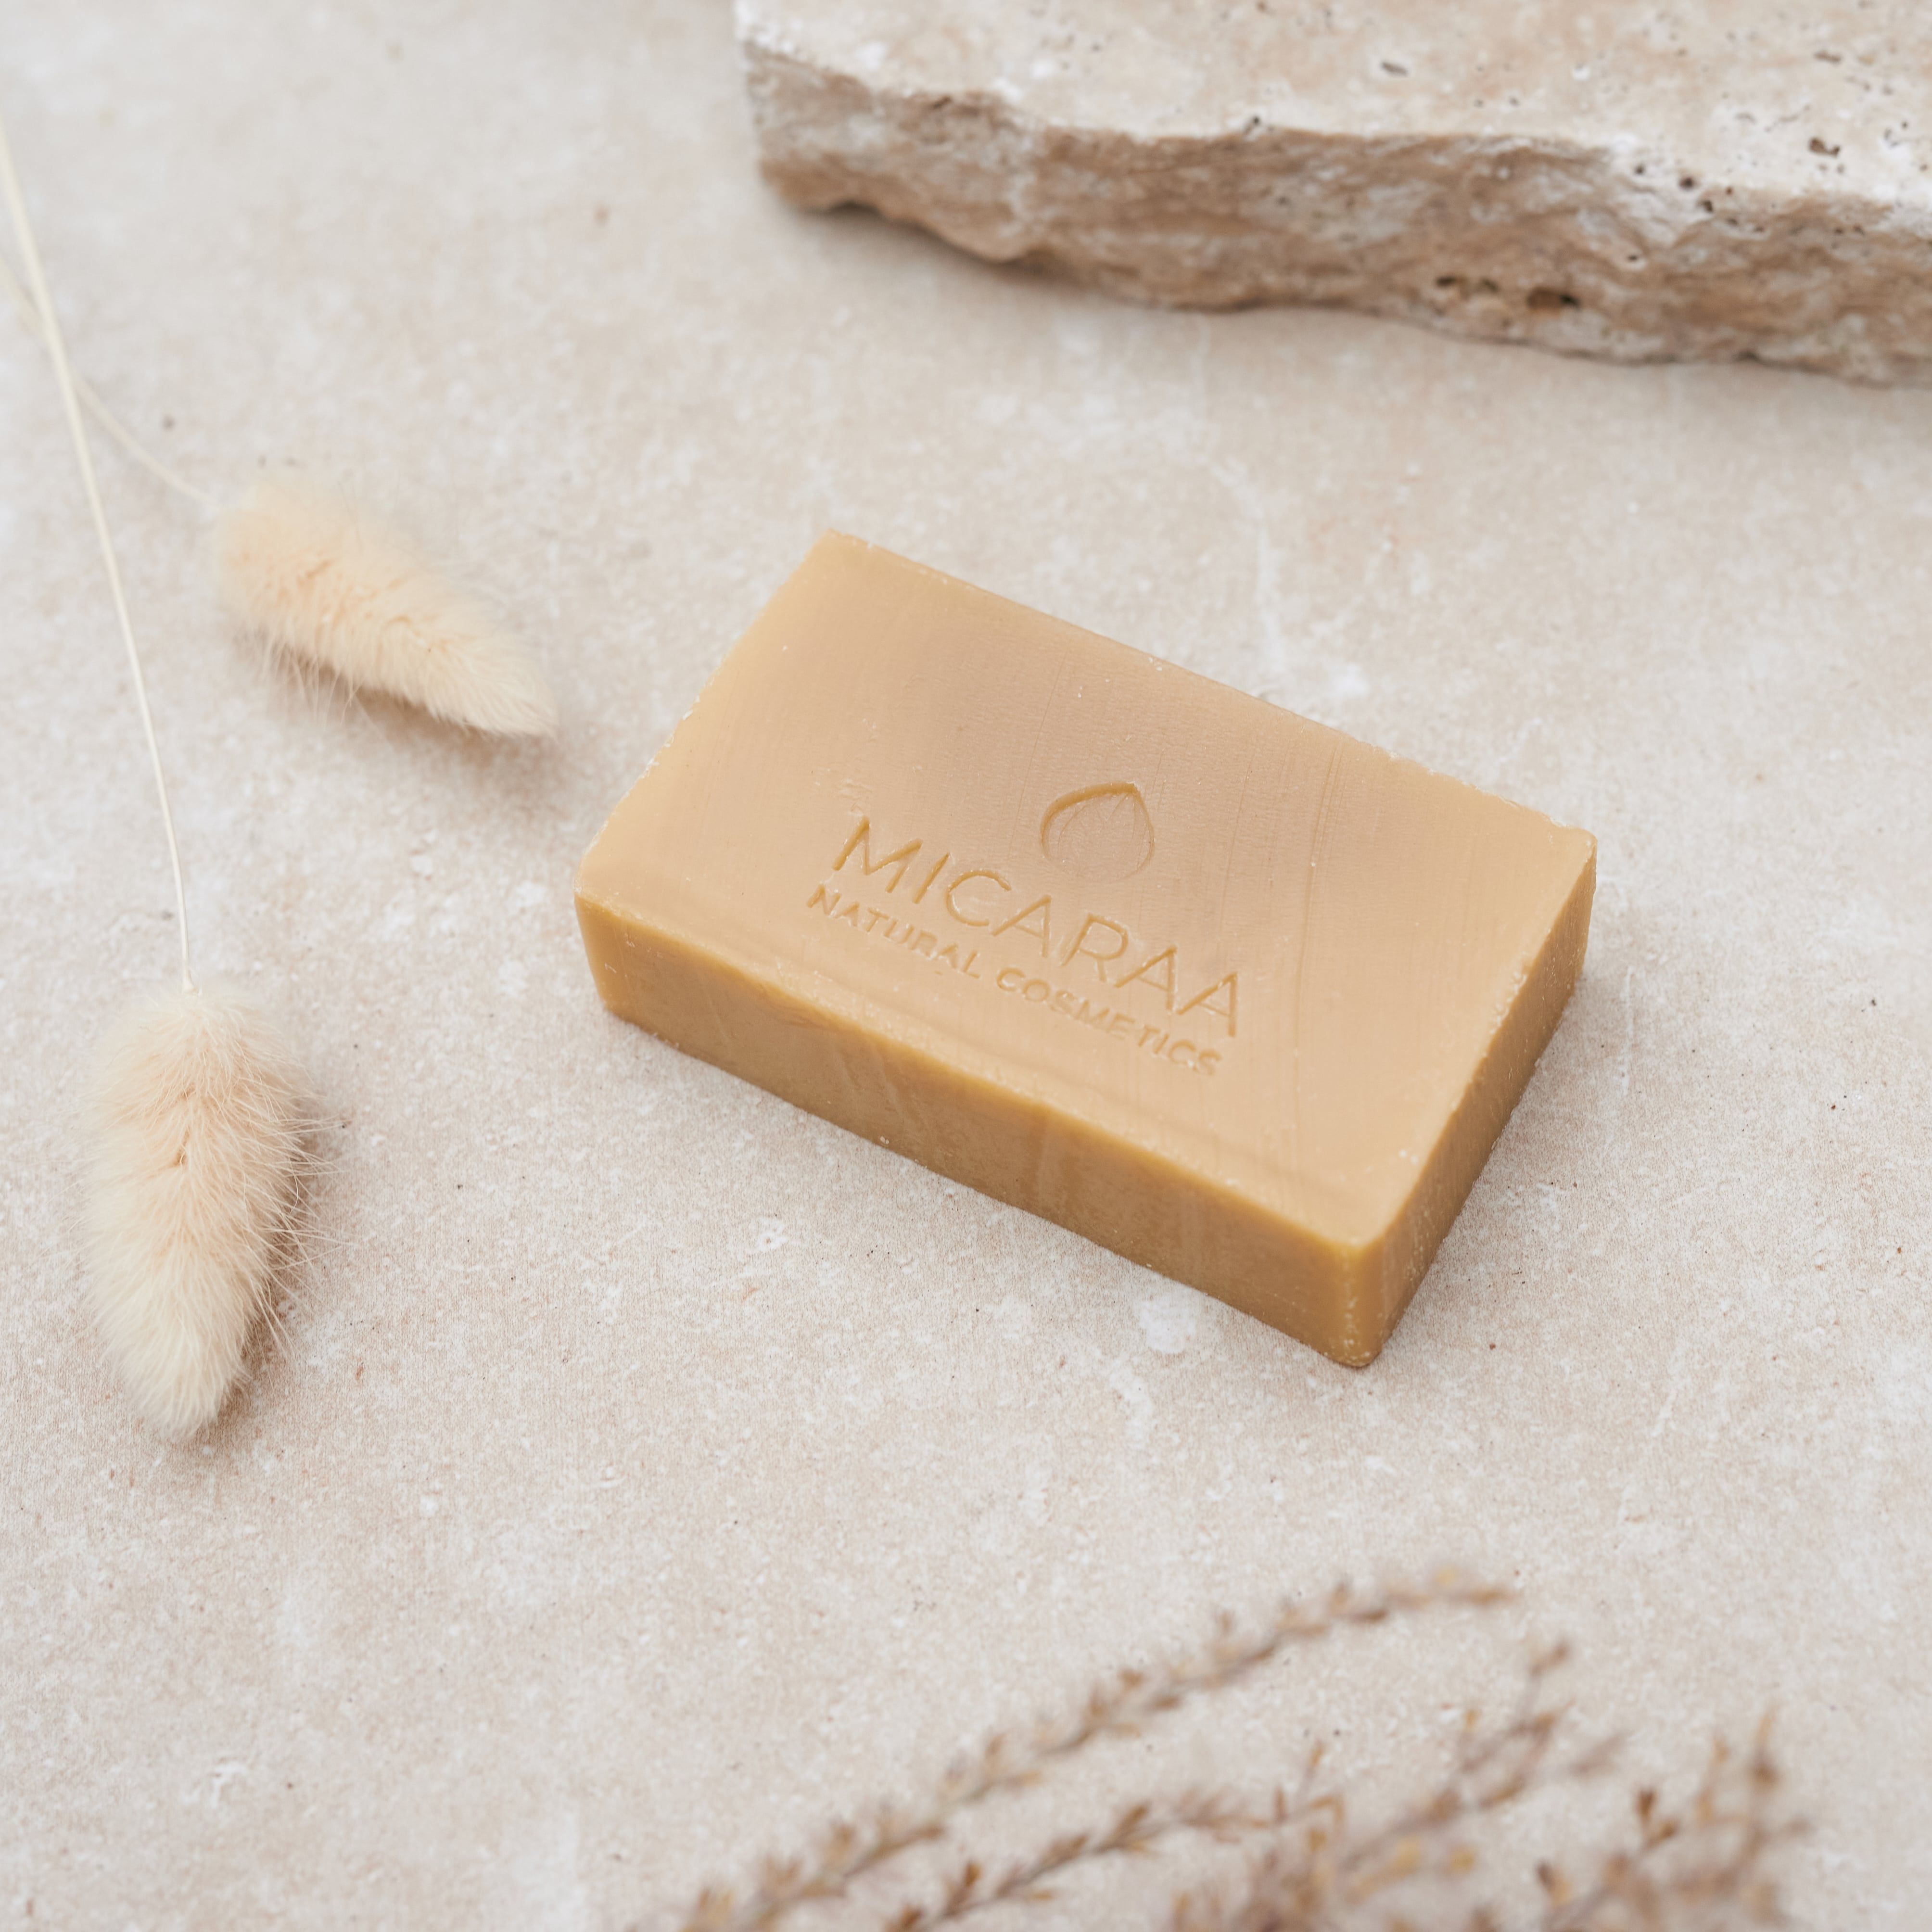 MICARAA Bio Shaving Soap